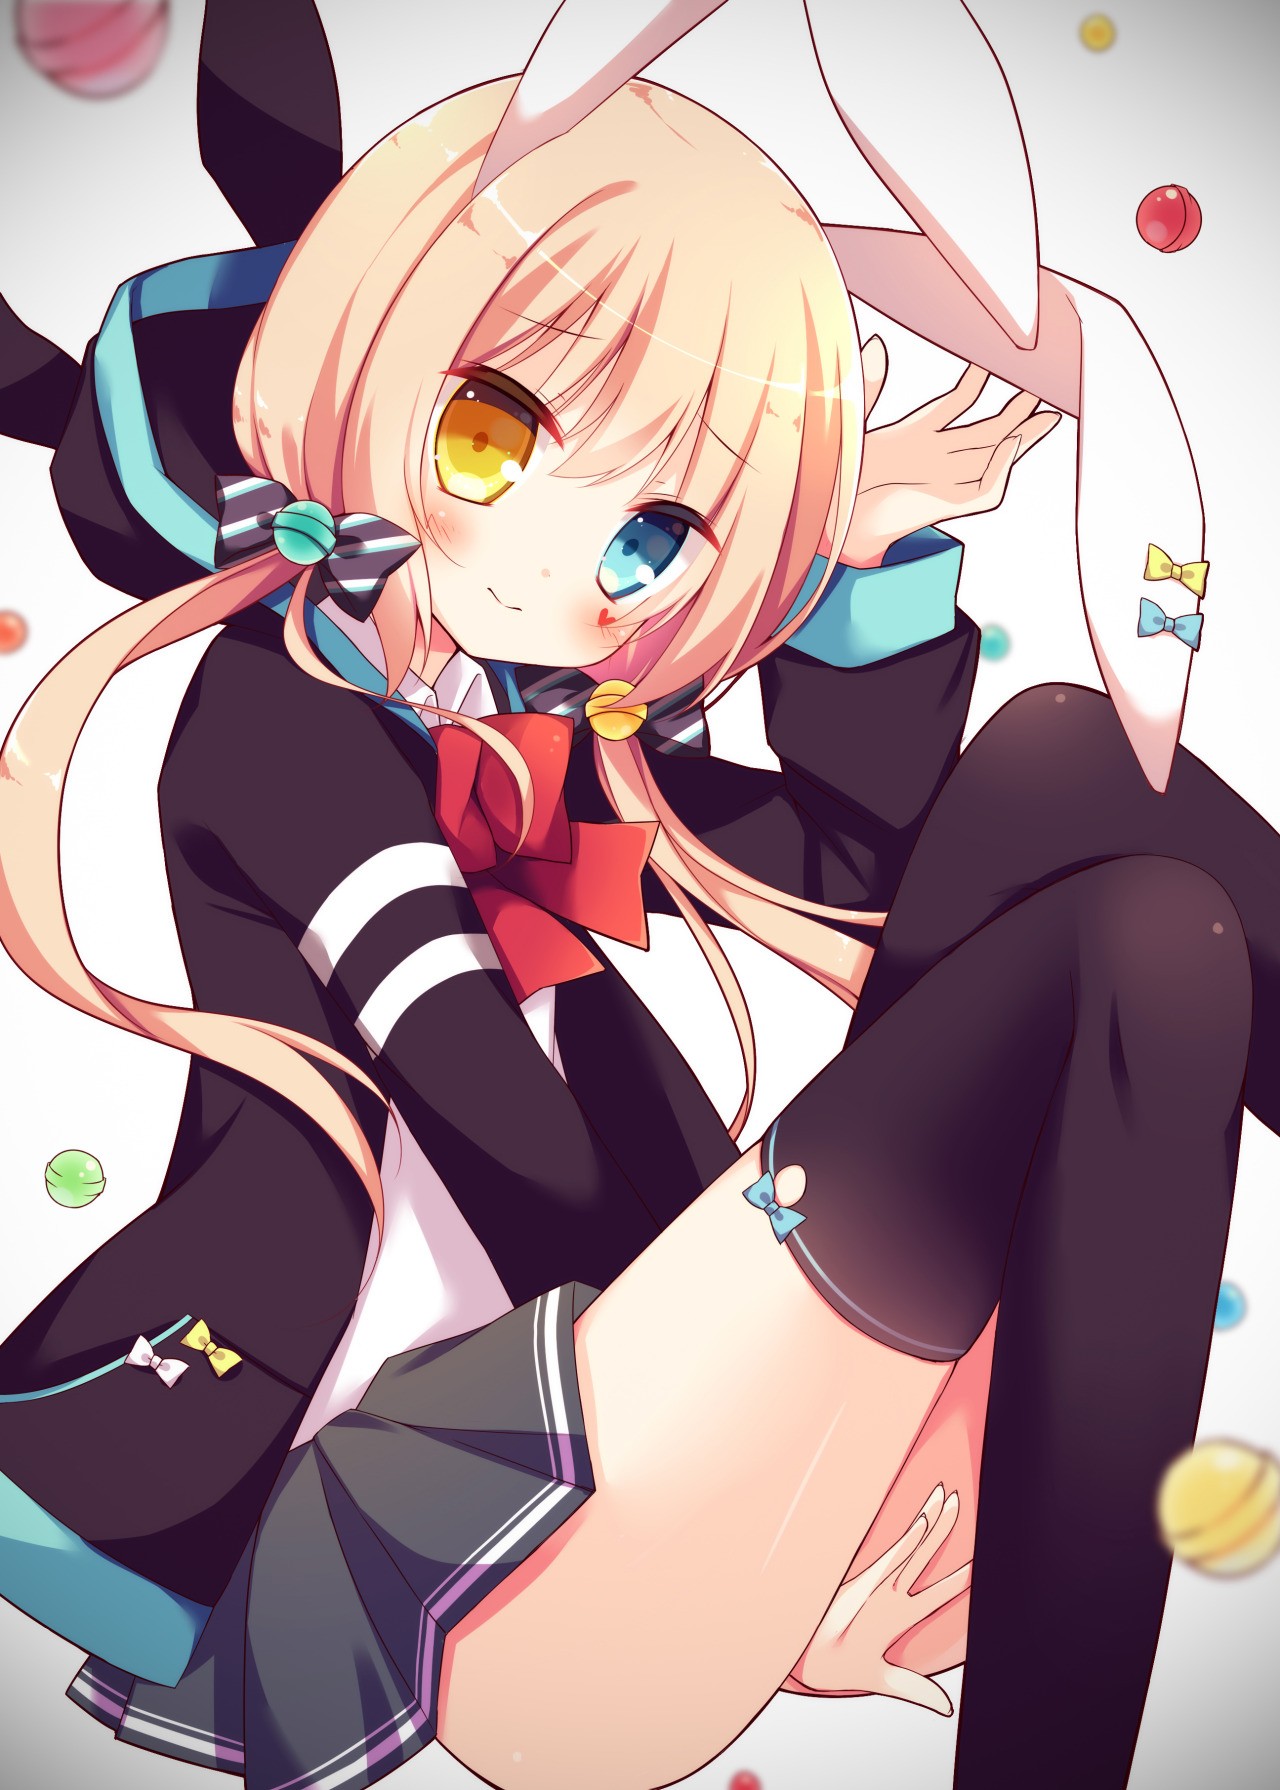 Anime 1280x1790 anime anime girls animal ears bunny ears heterochromia blonde long hair stockings skirt thigh-highs